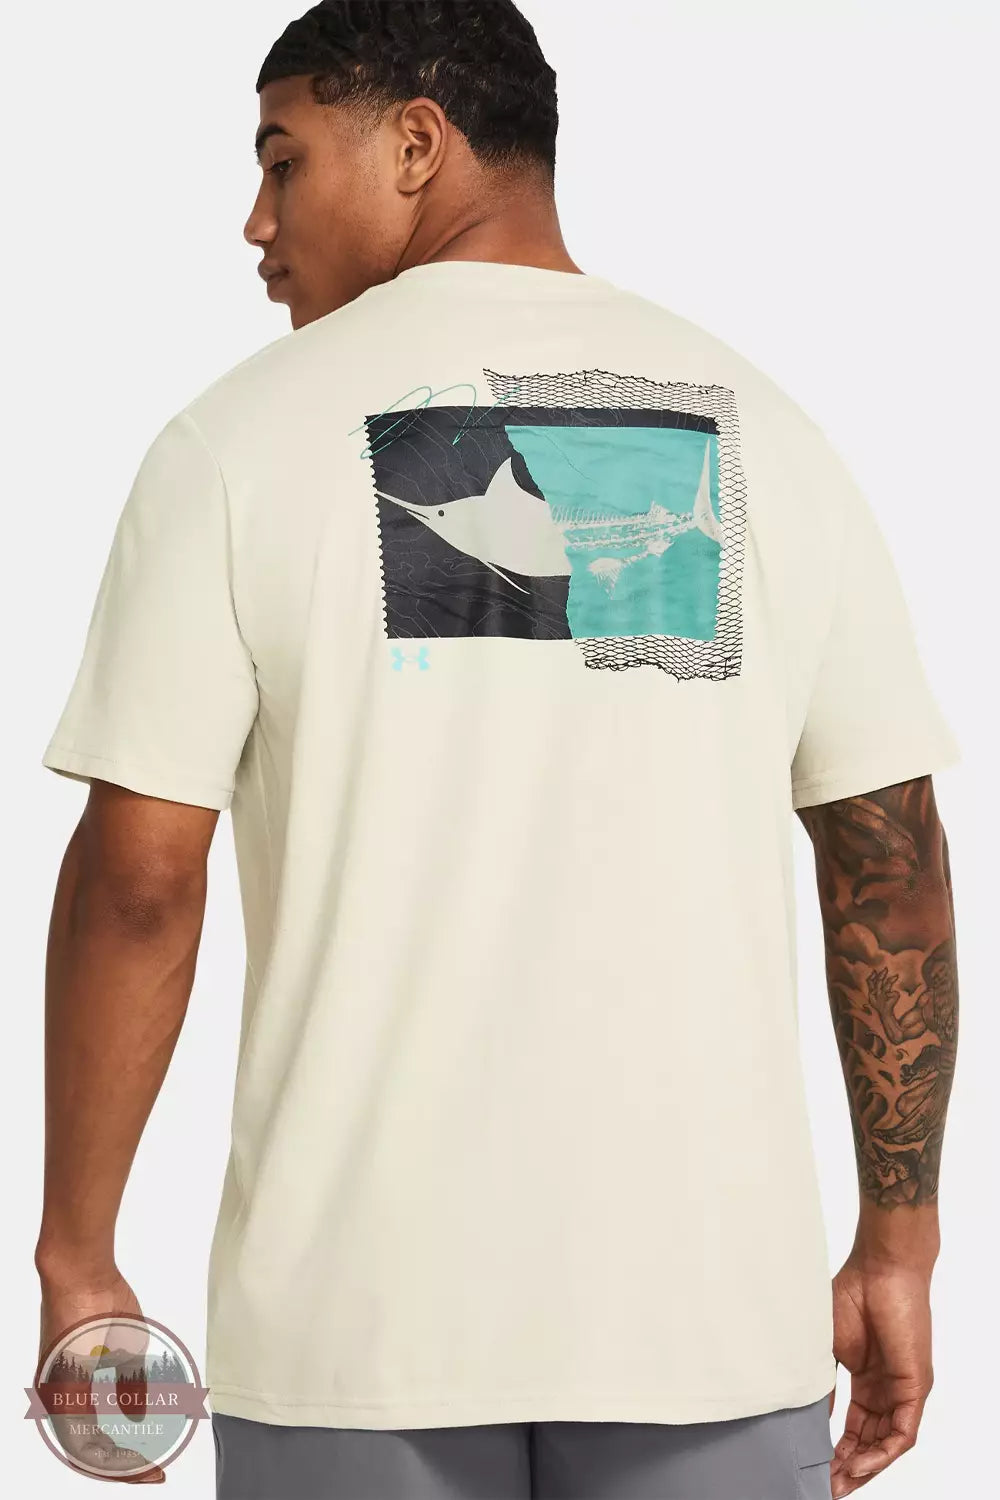 Under Armour 1382907-273 Marlin Short Sleeve T-Shirt in Silt Back View